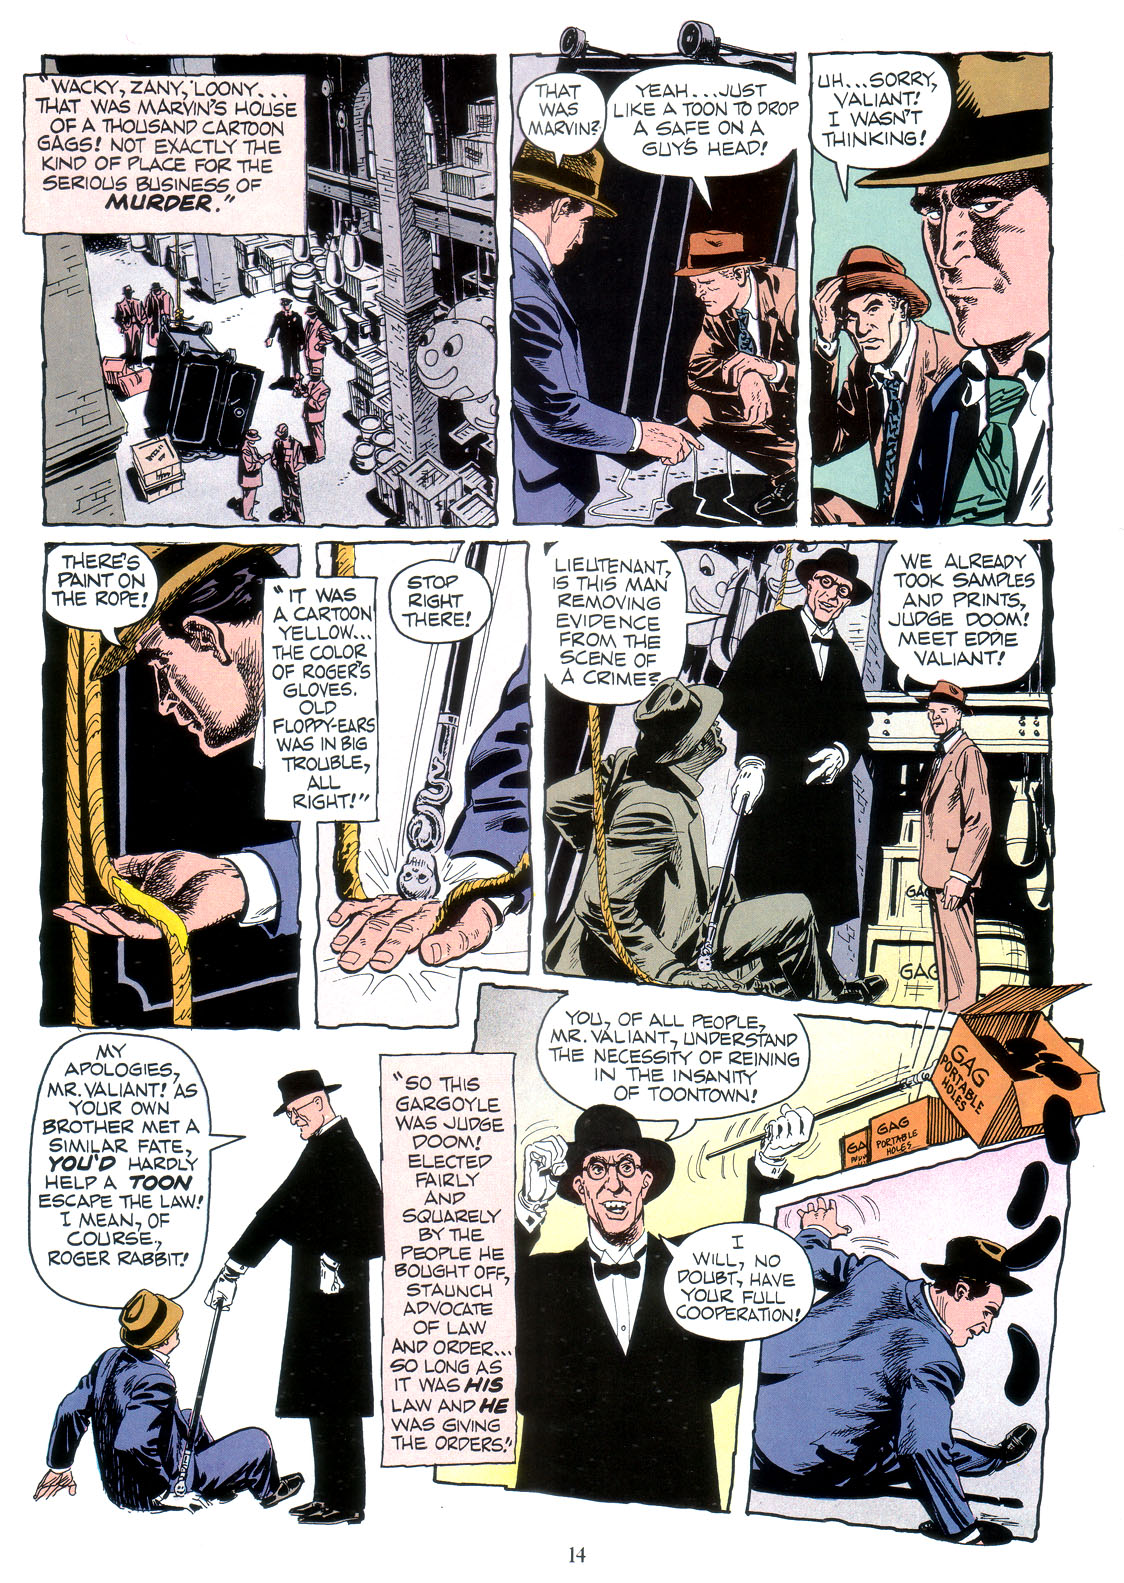 Marvel Graphic Novel issue 41 - Who Framed Roger Rabbit - Page 16